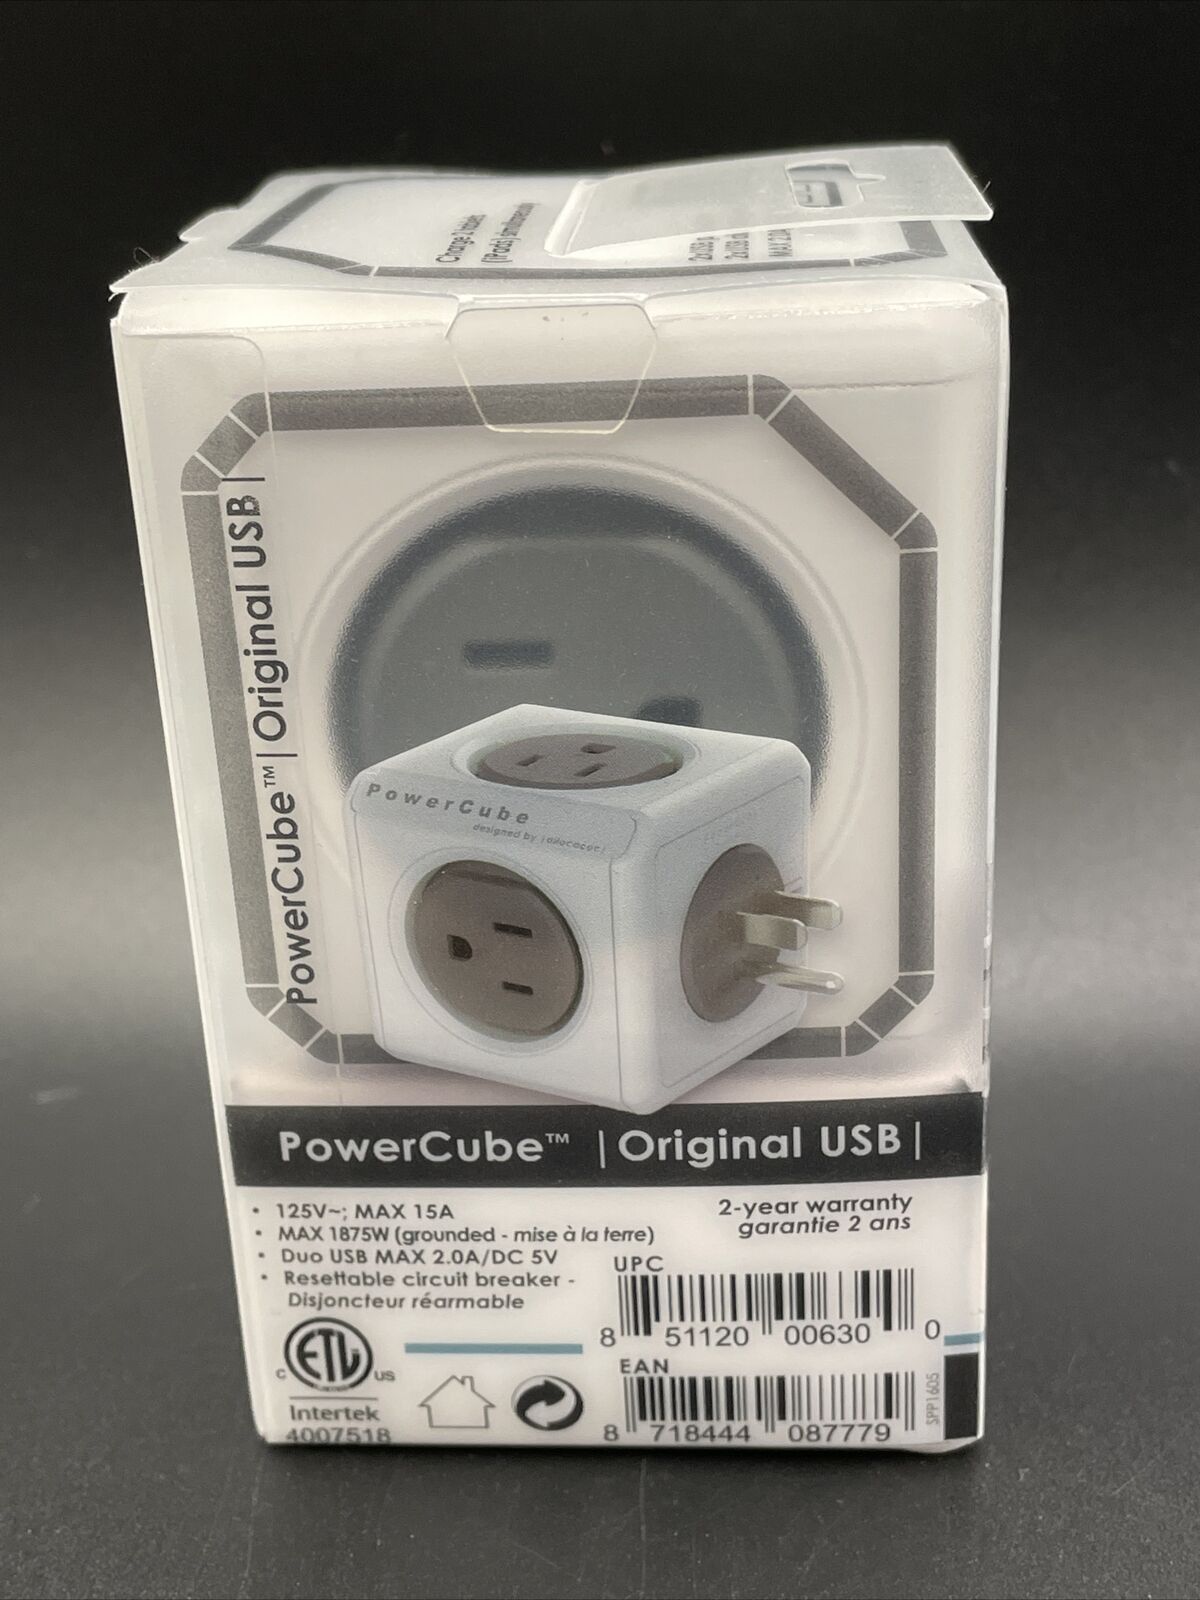  USB Wall Plug, Allocacoc PowerCube, Original